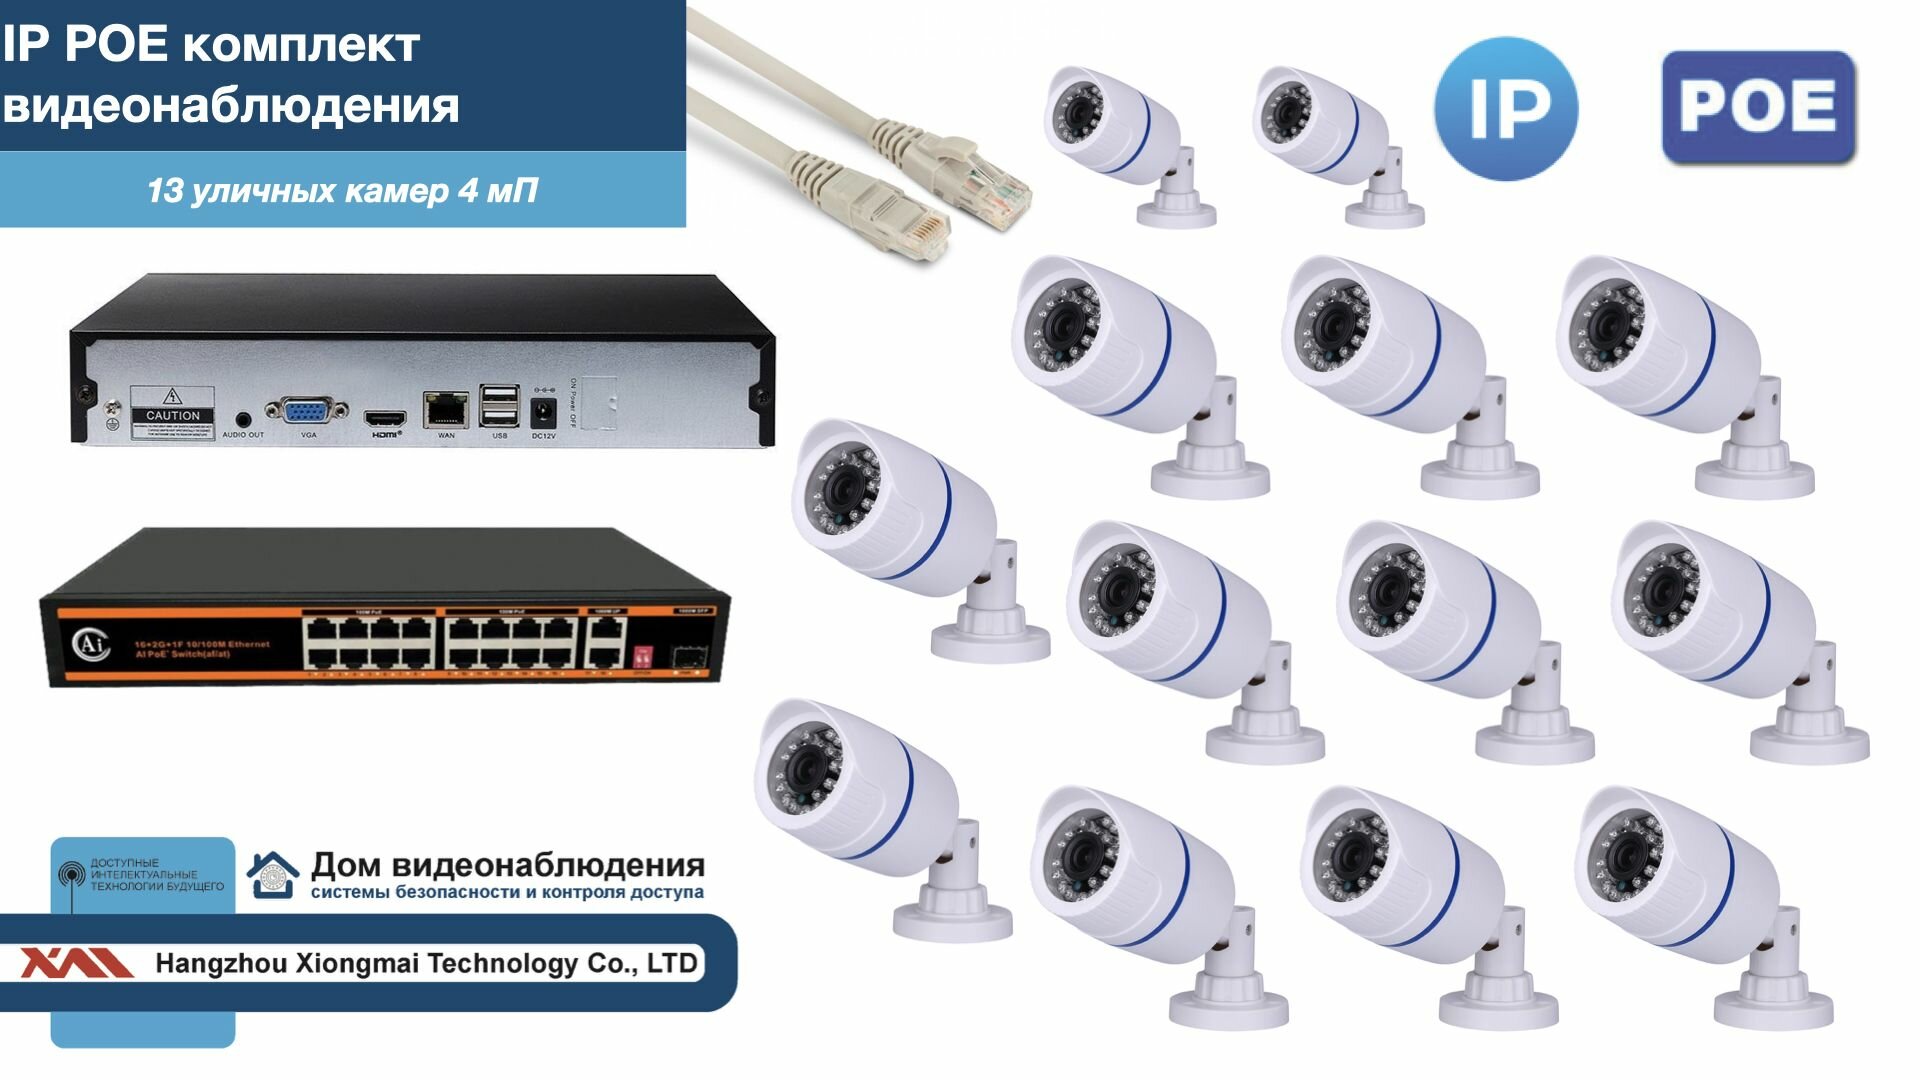 Полный IP POE комплект видеонаблюдения на 13 камер (KIT13IPPOE100W4MP)